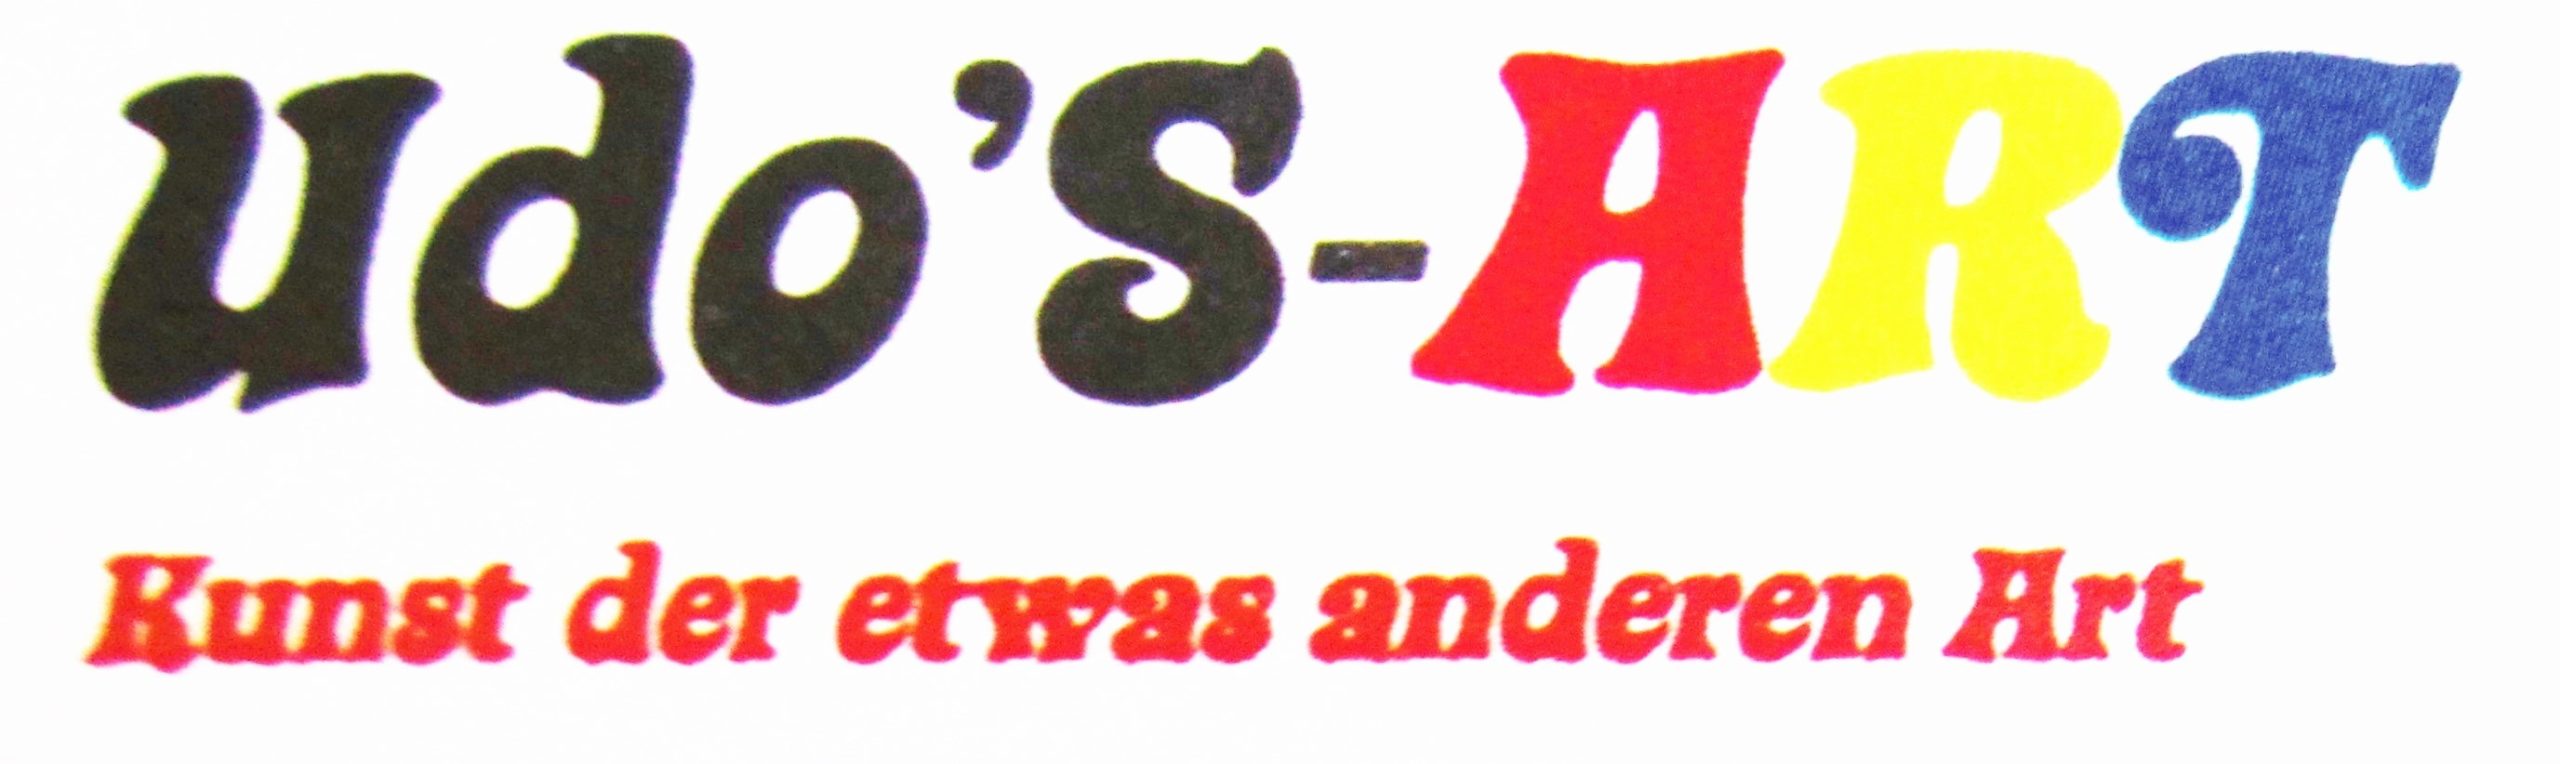 Udos's Art-UdoShmid-logo